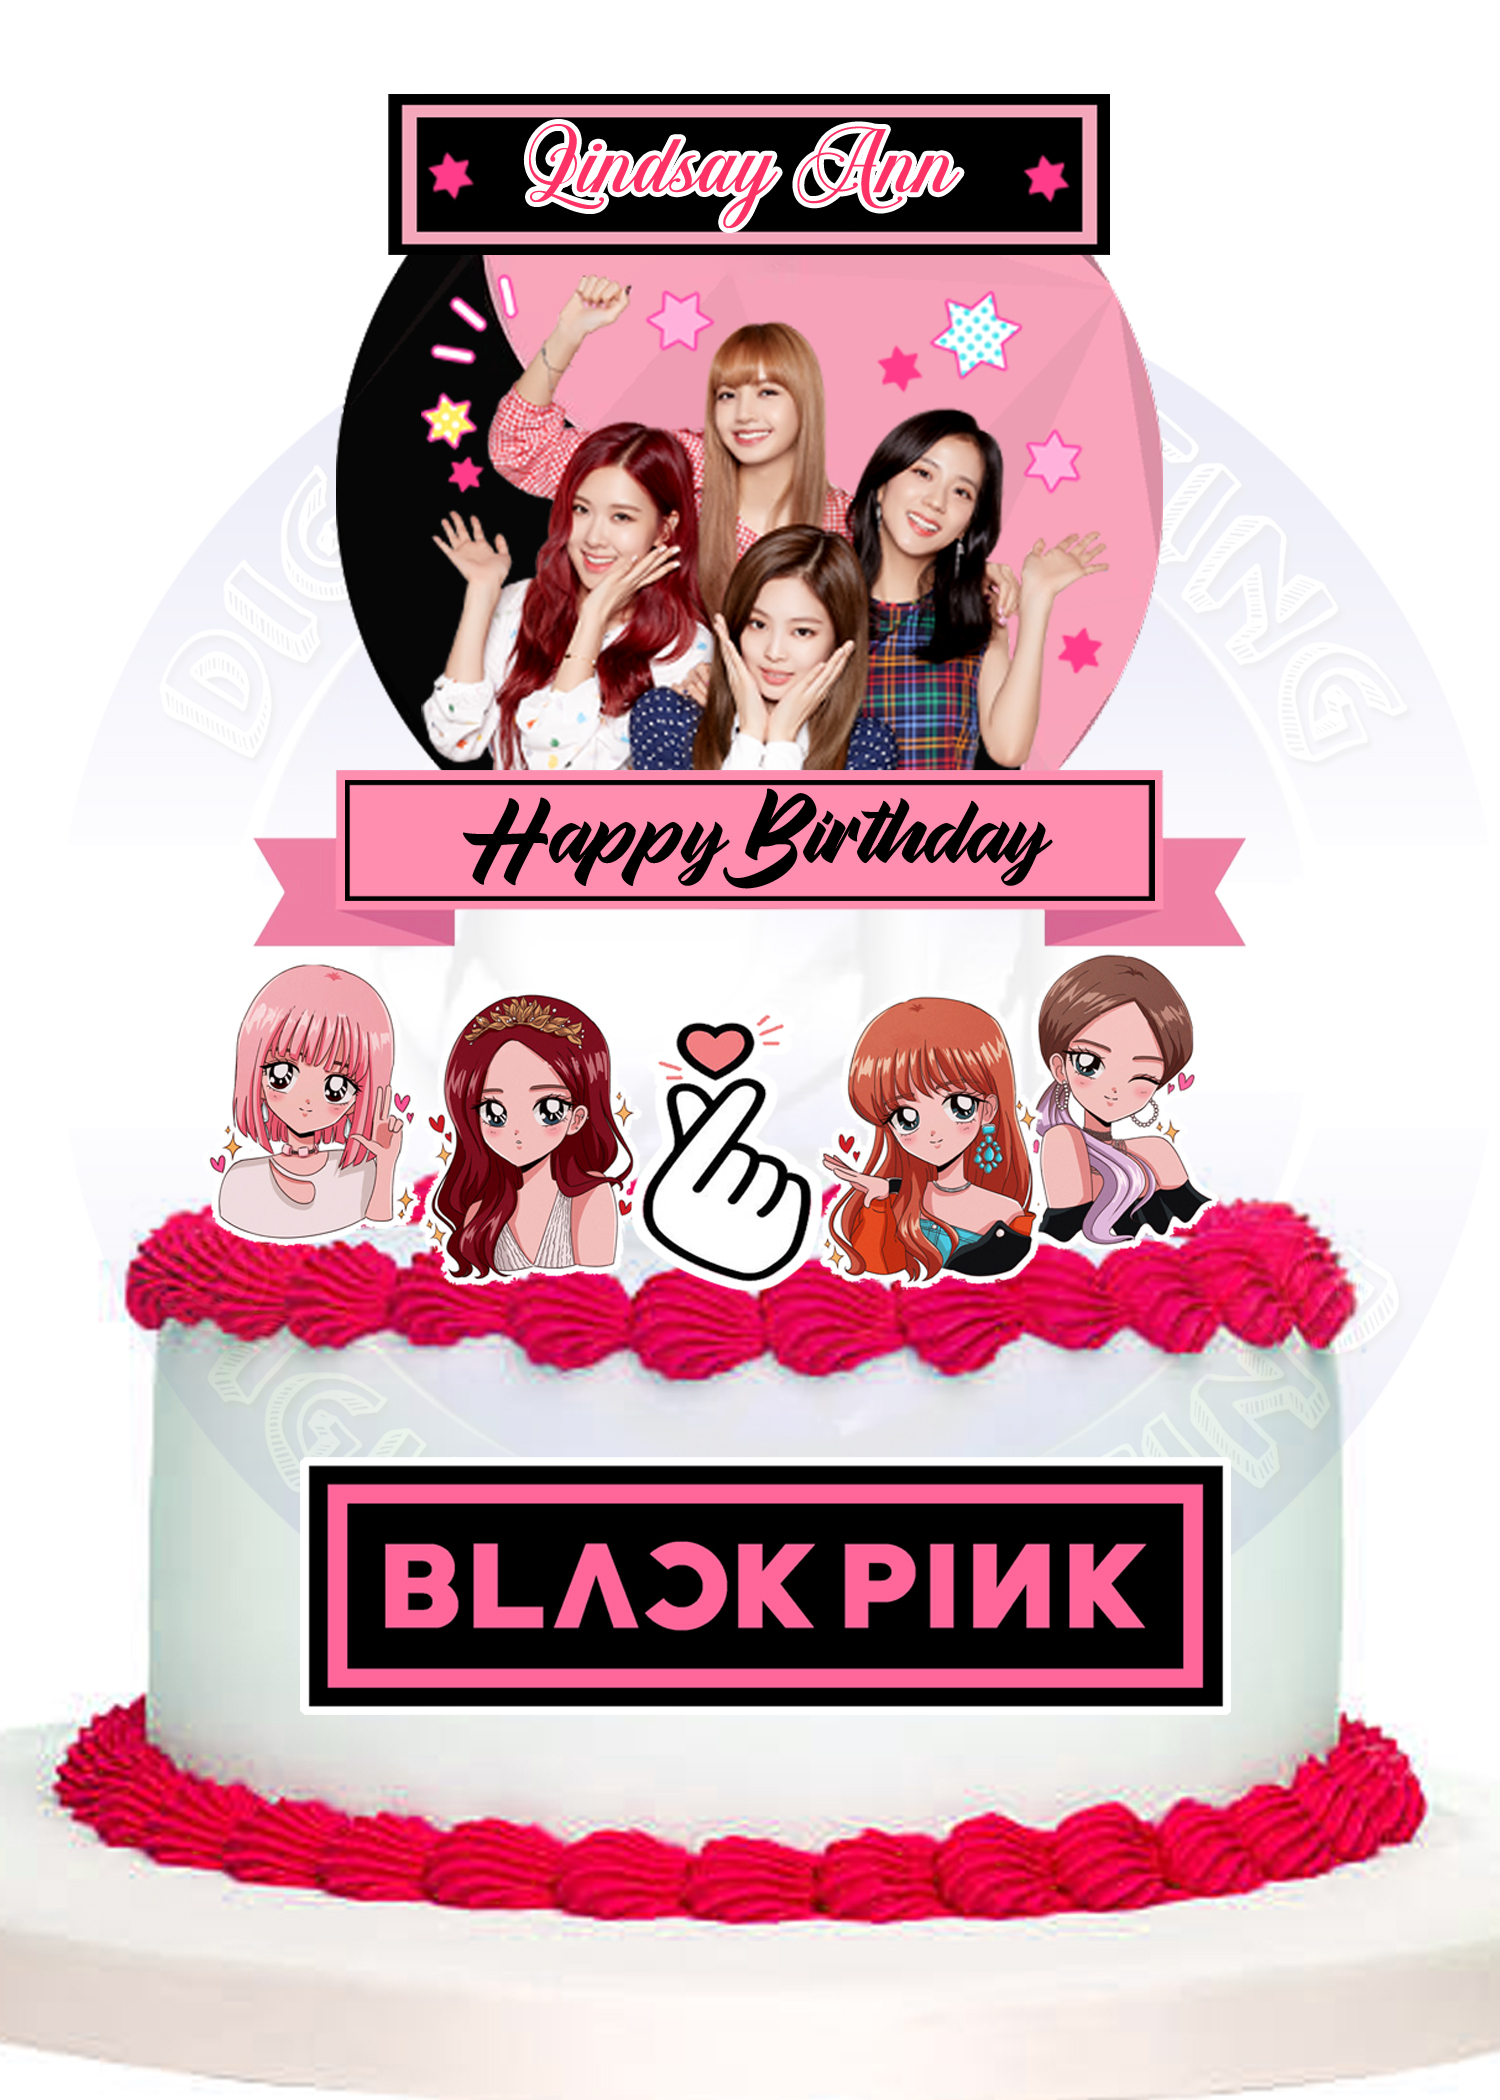 Blackpink Cakes | Order Black Pink Theme Cakes Online